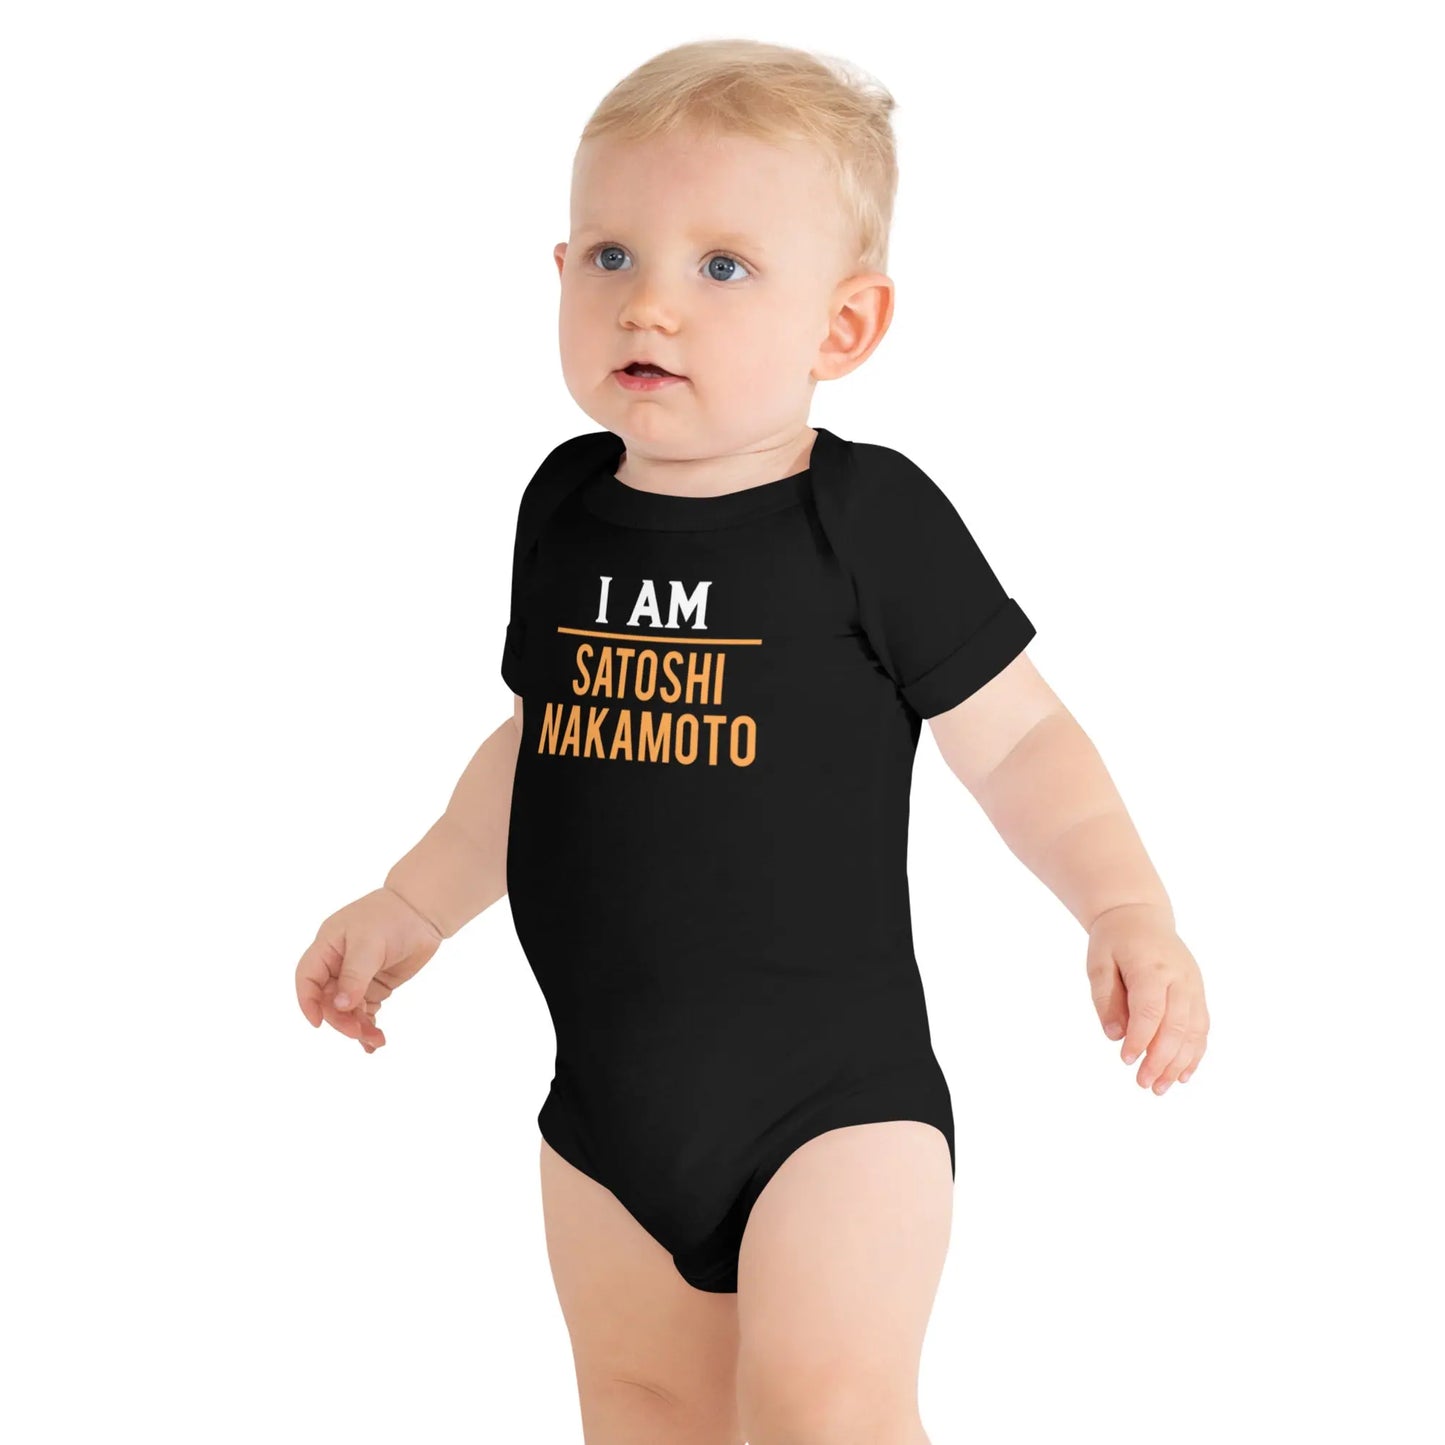 I AM Satoshi Nakamoto - Baby Bitcoin Body Suit - Store of Value